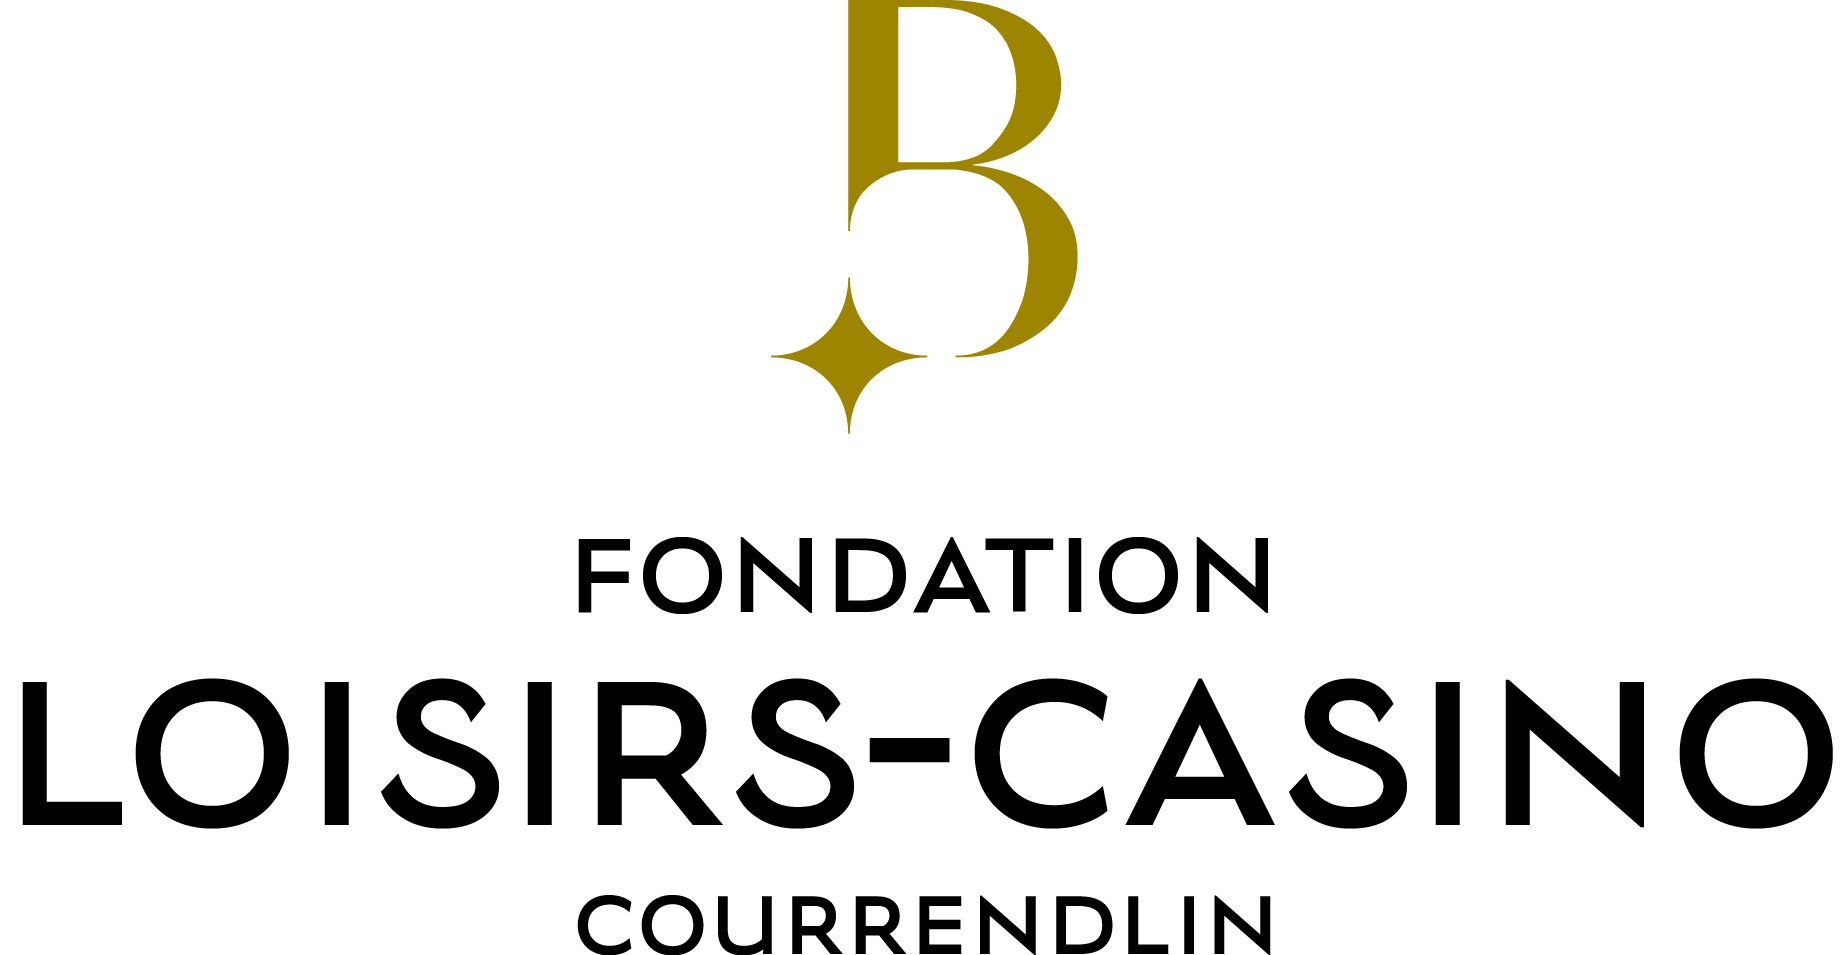 Fondation Loisirs-Casino